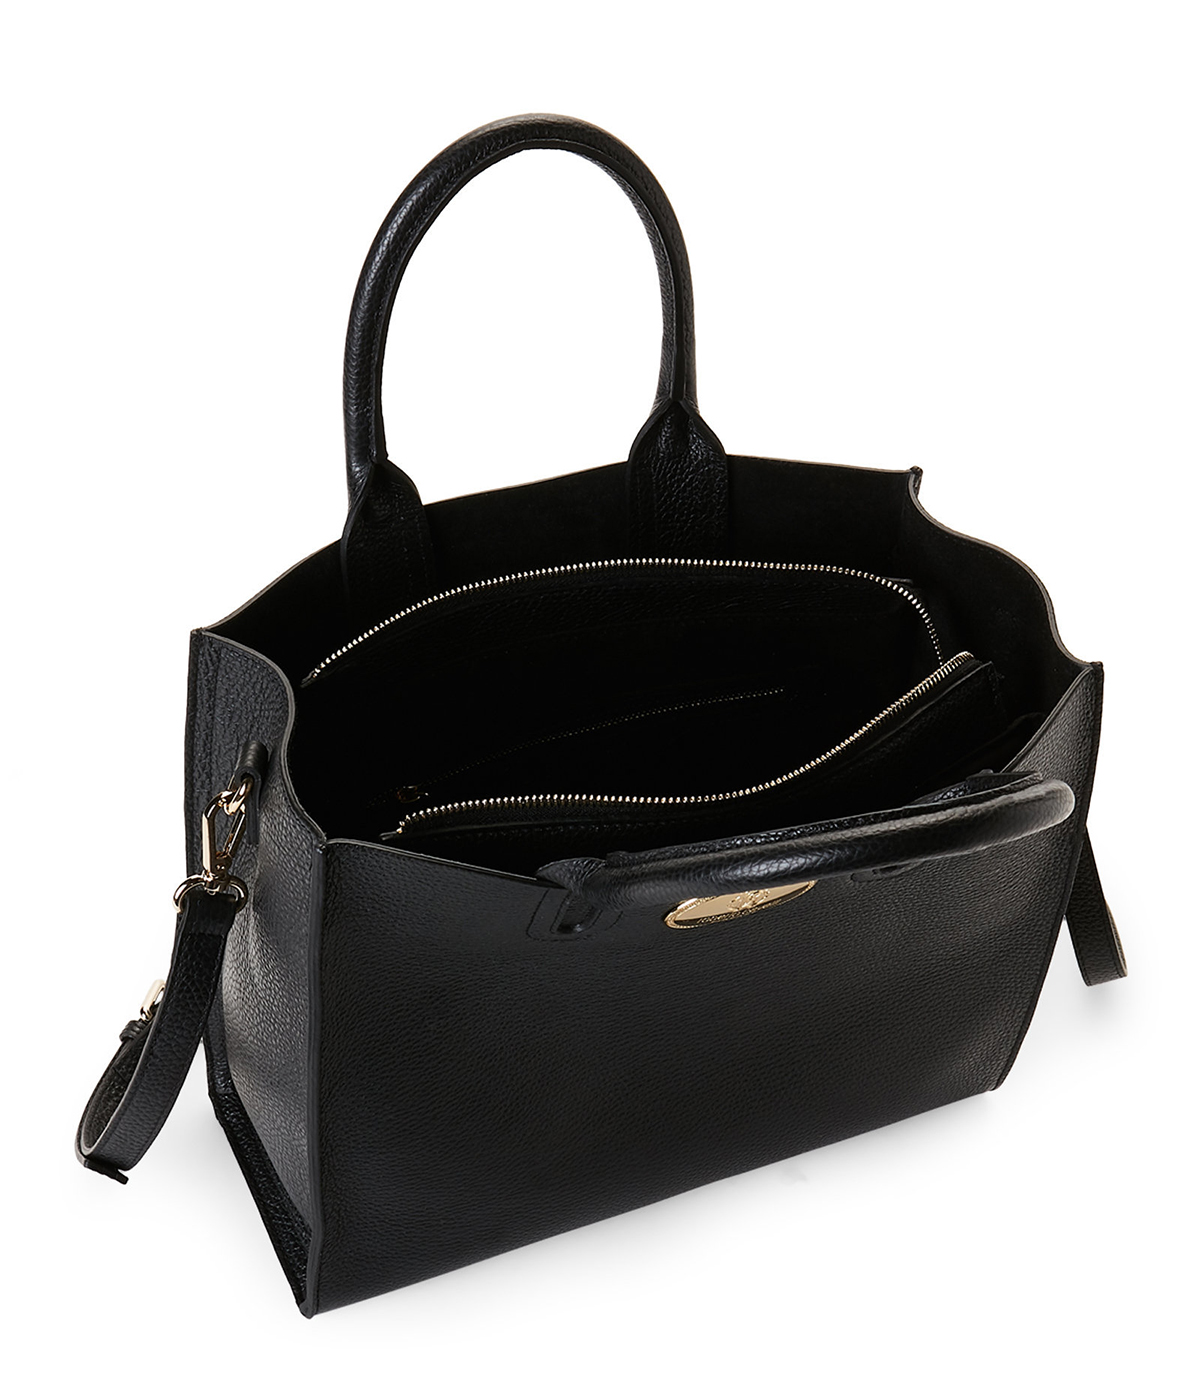 Roberto Cavalli - Women's Bag  Bags, Roberto cavalli, Edgy bags